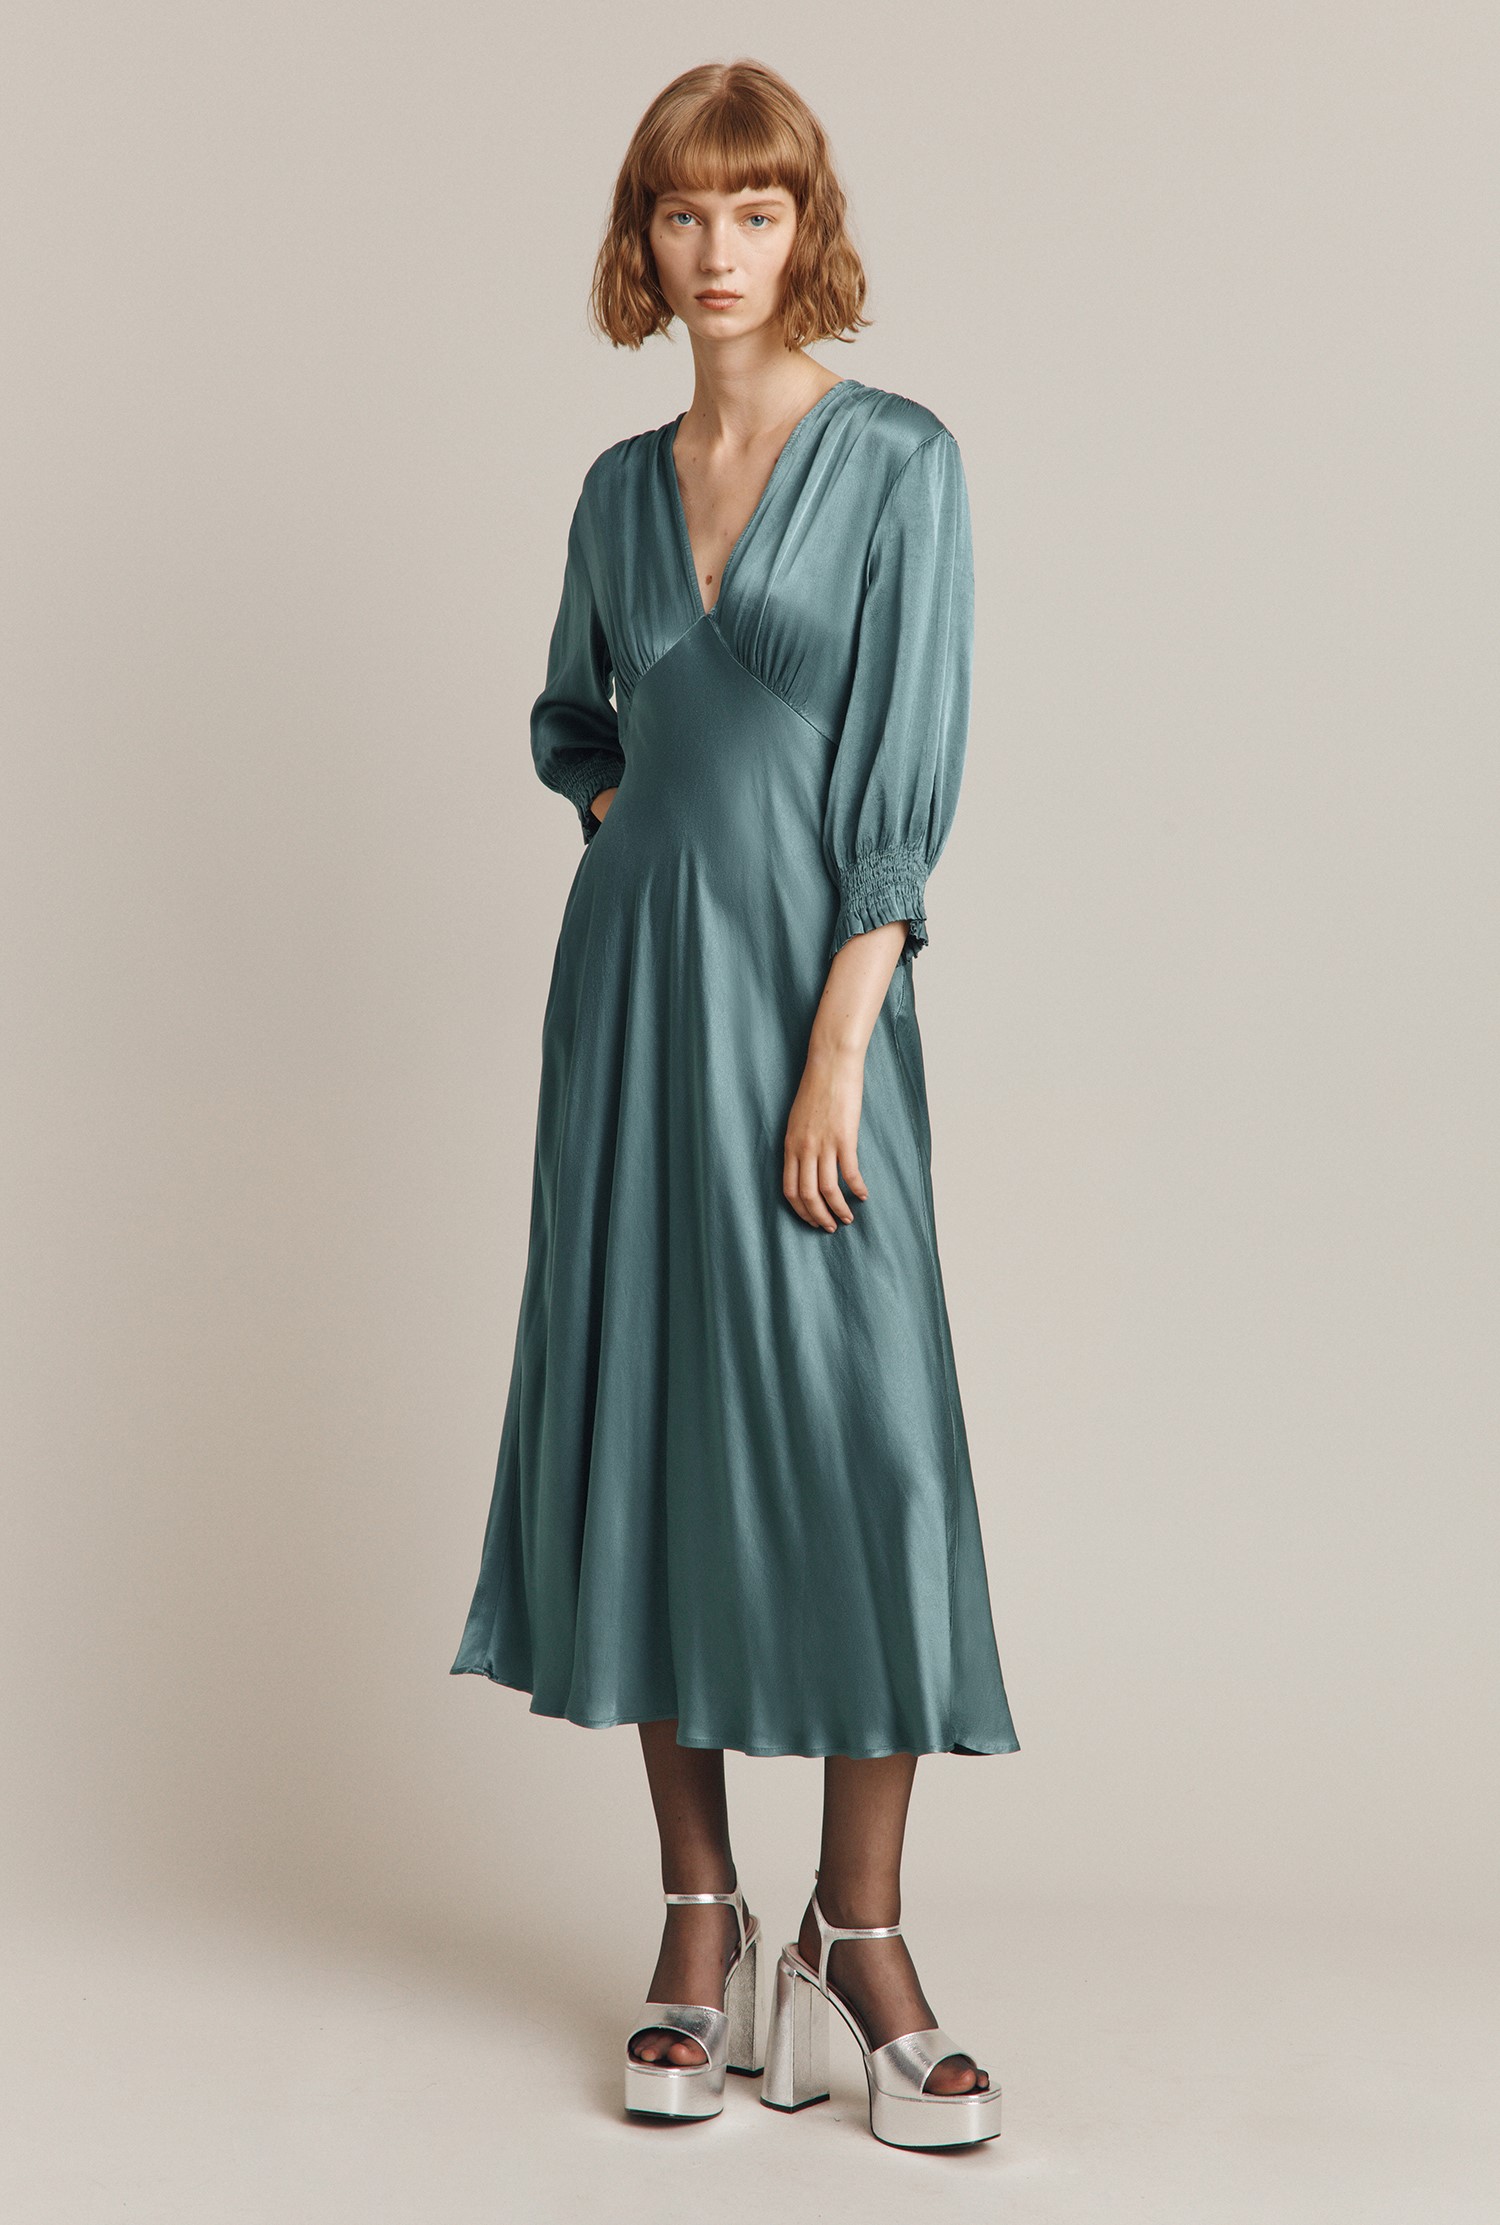 Elle Blue Satin Midi Dress | GHOST